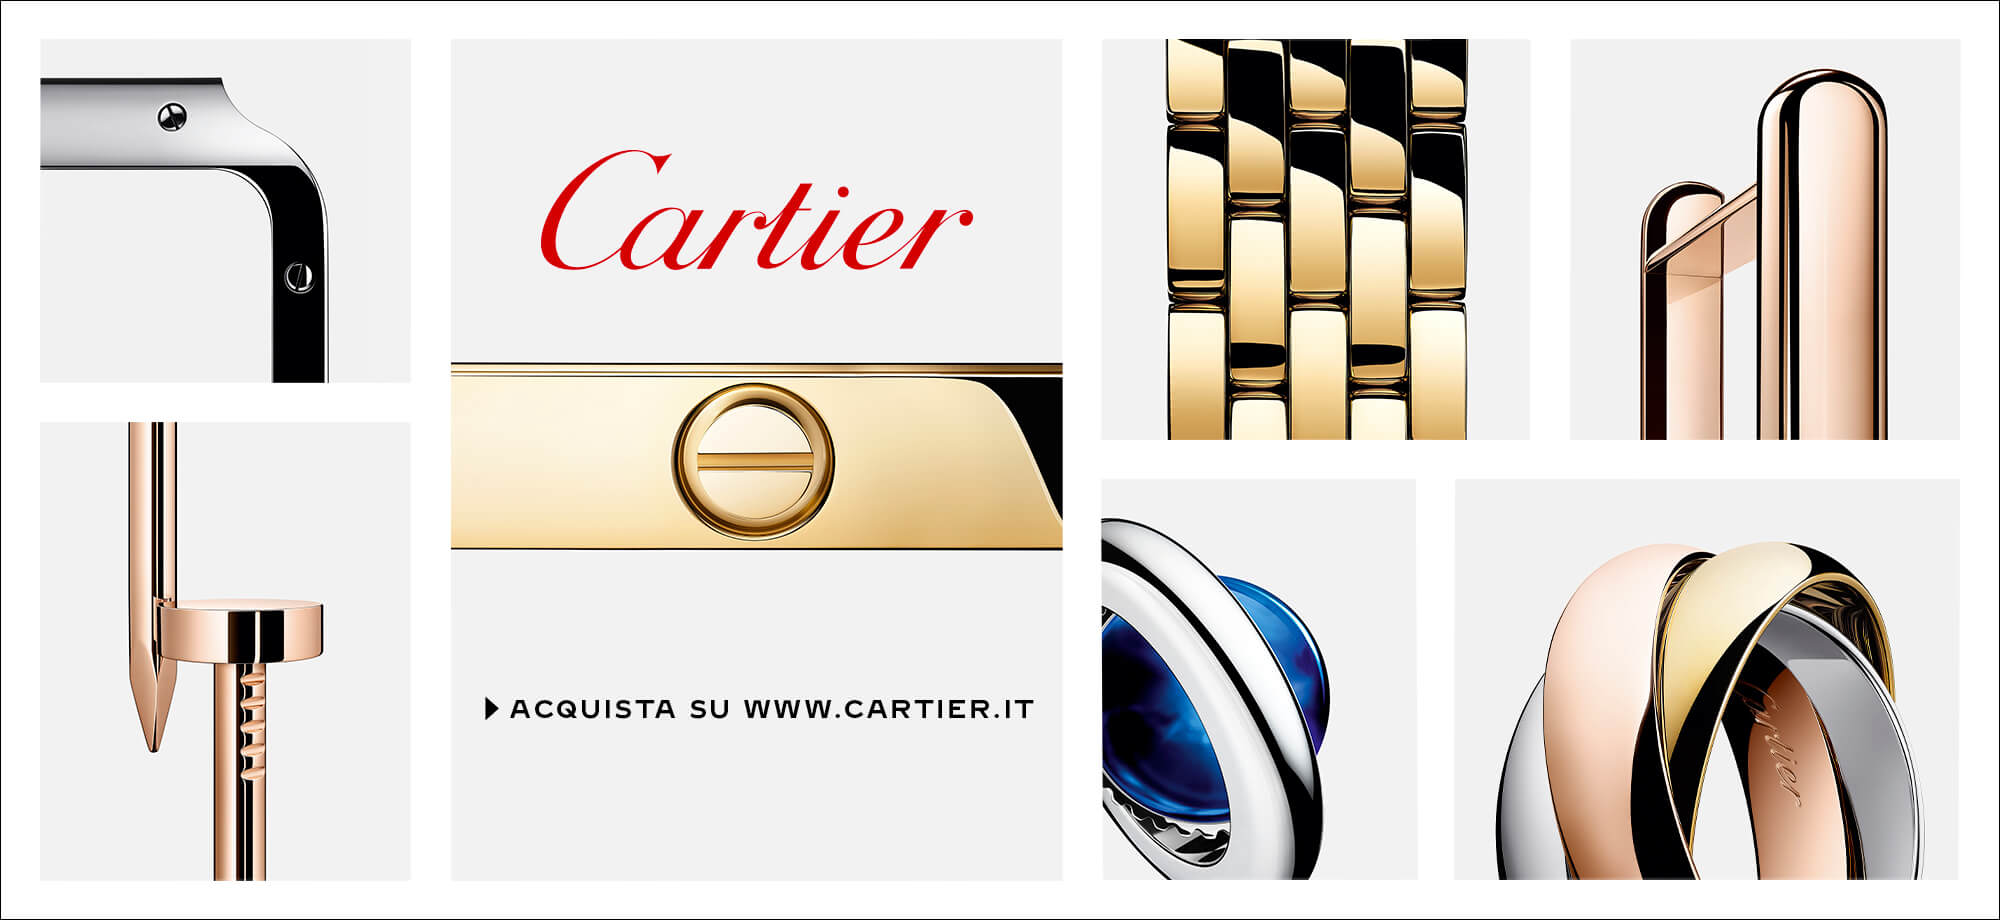 Gioielleria Cartier